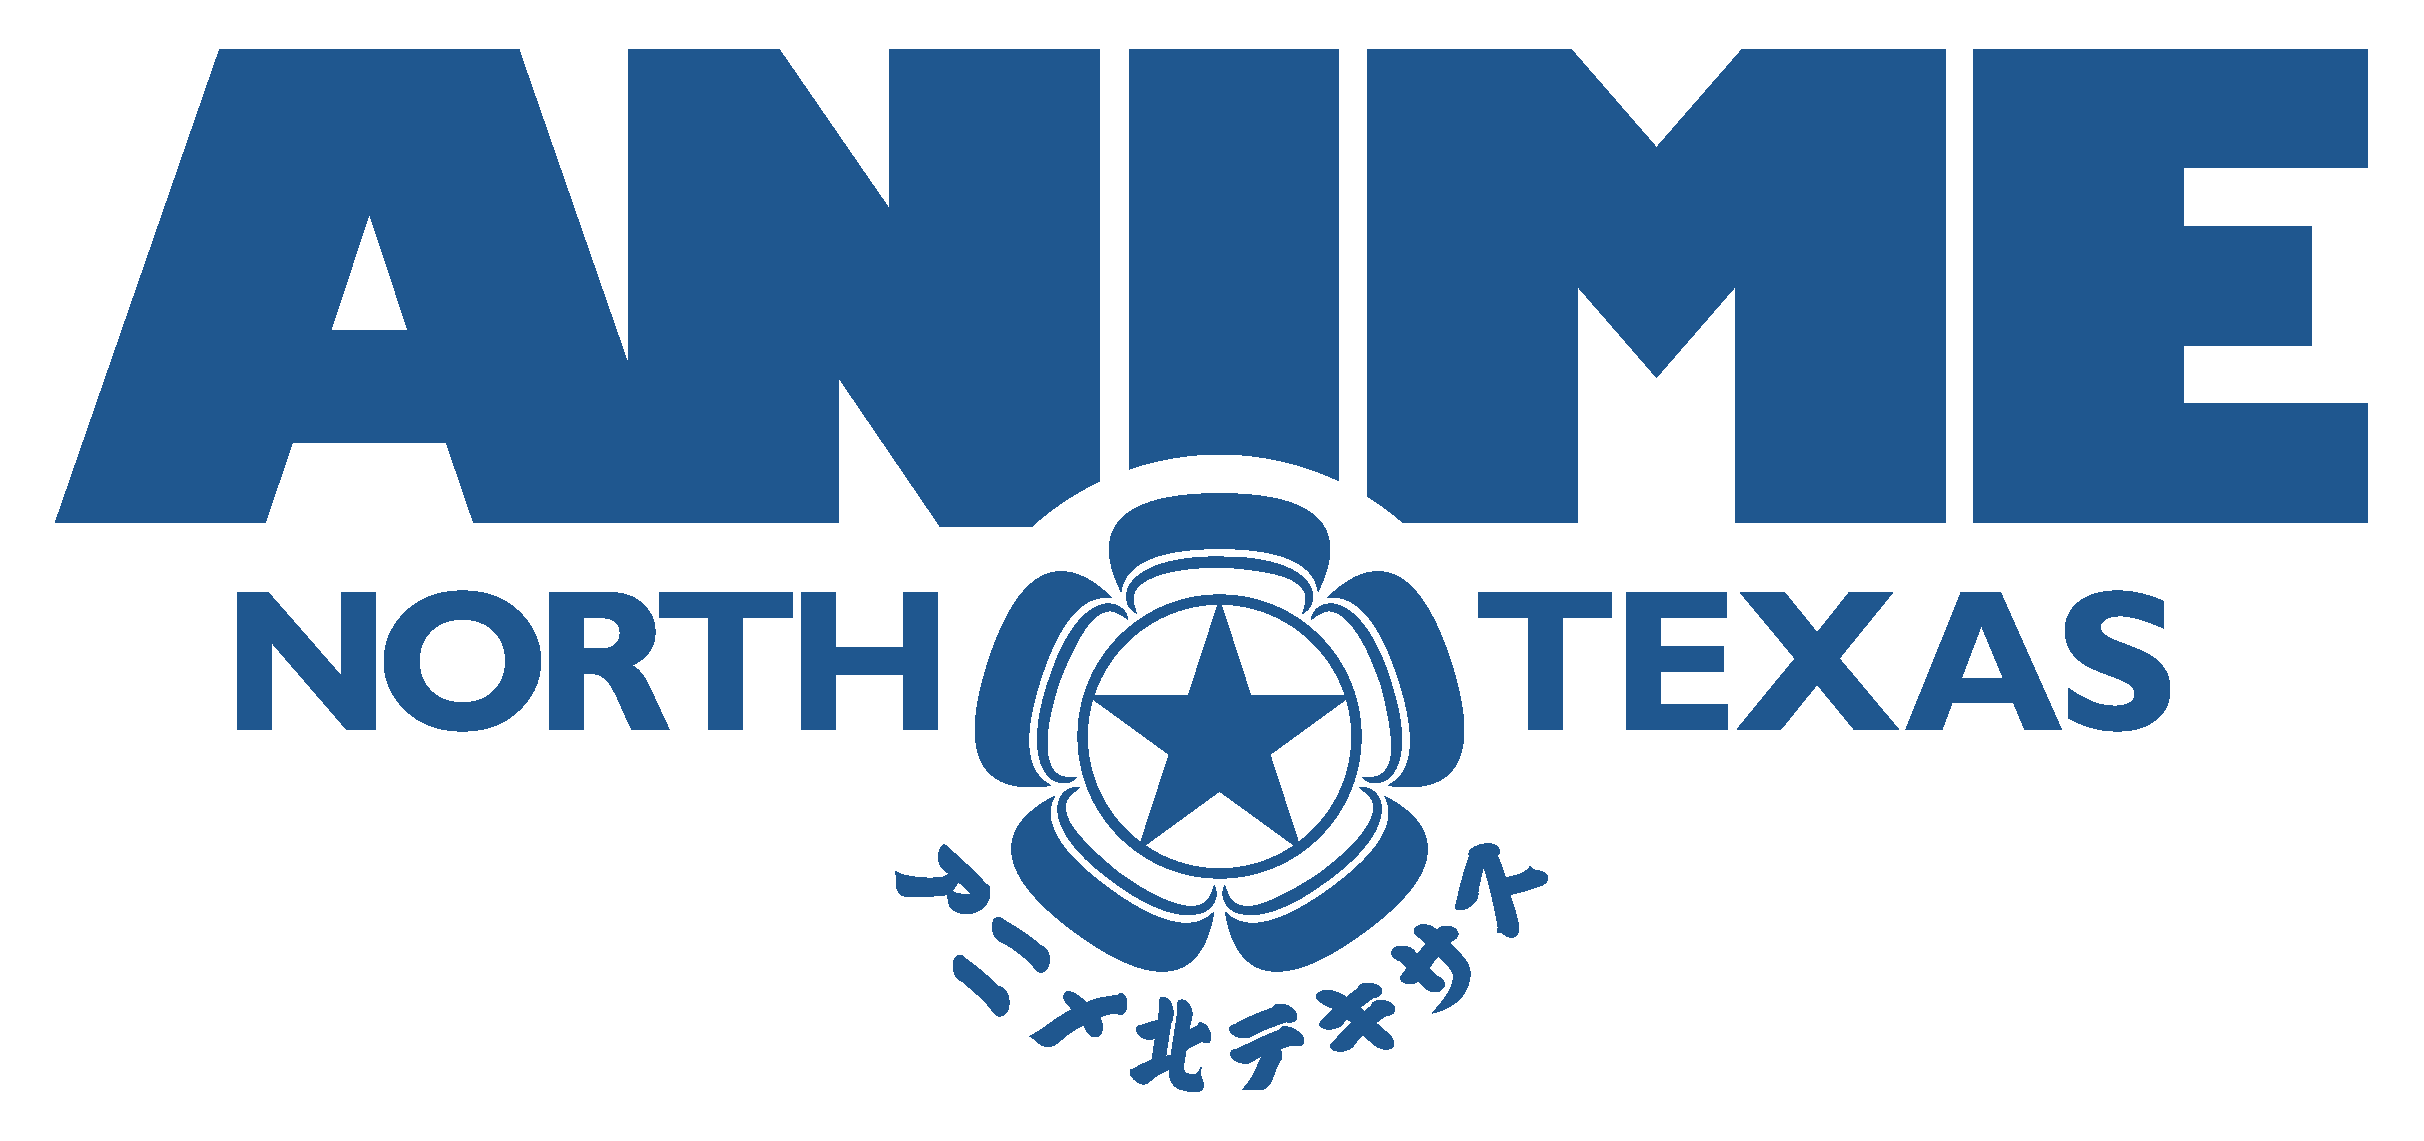 Anime North Texas